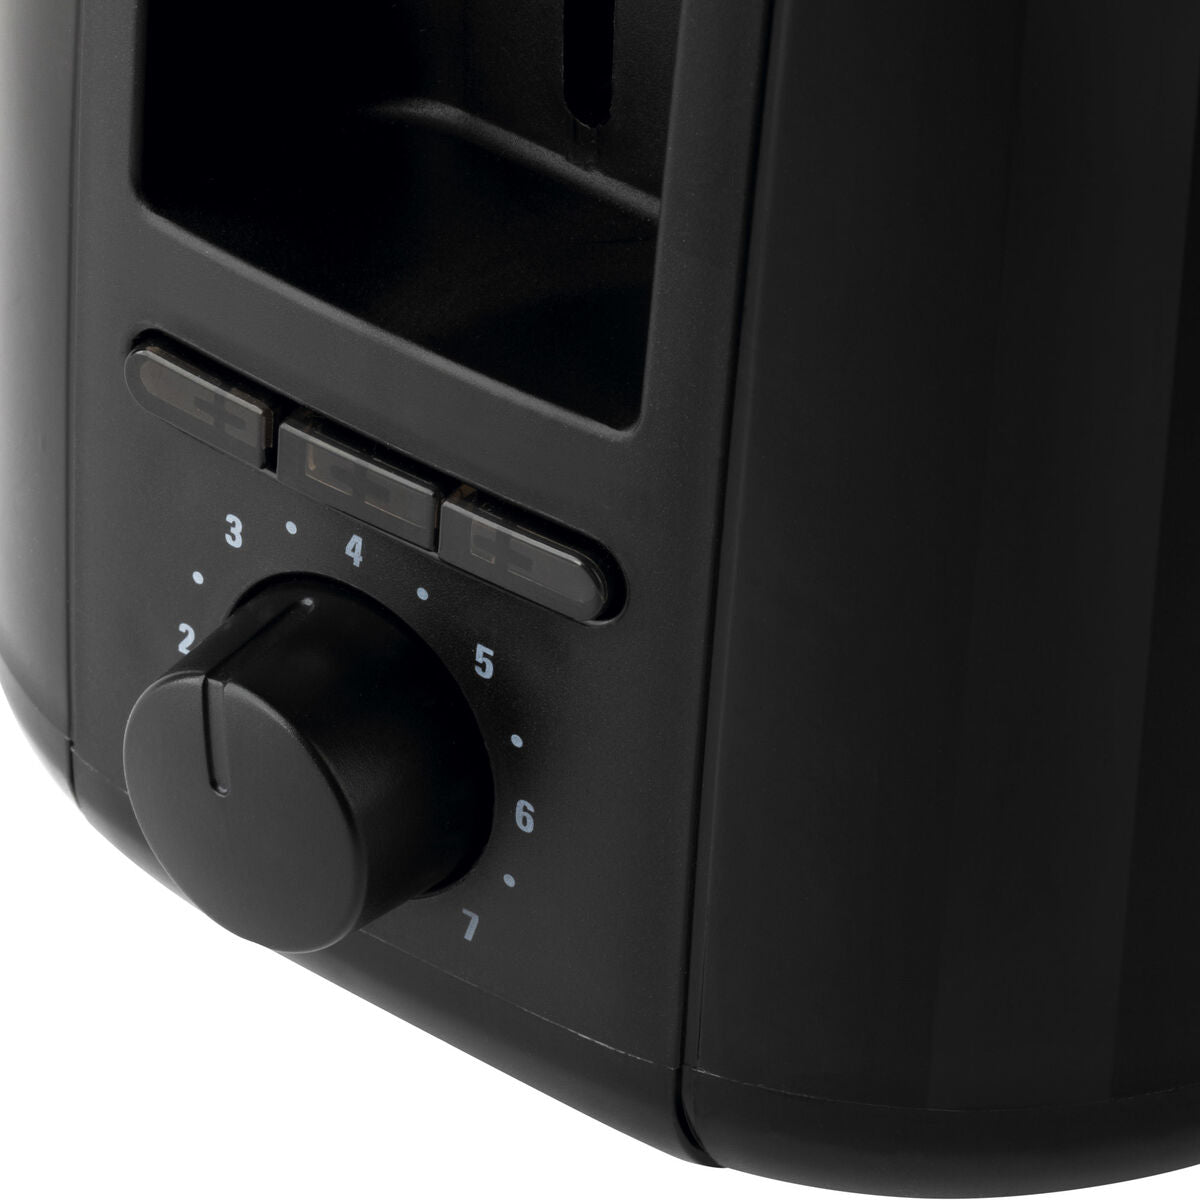 Toaster JATA 1400 W - CA International 